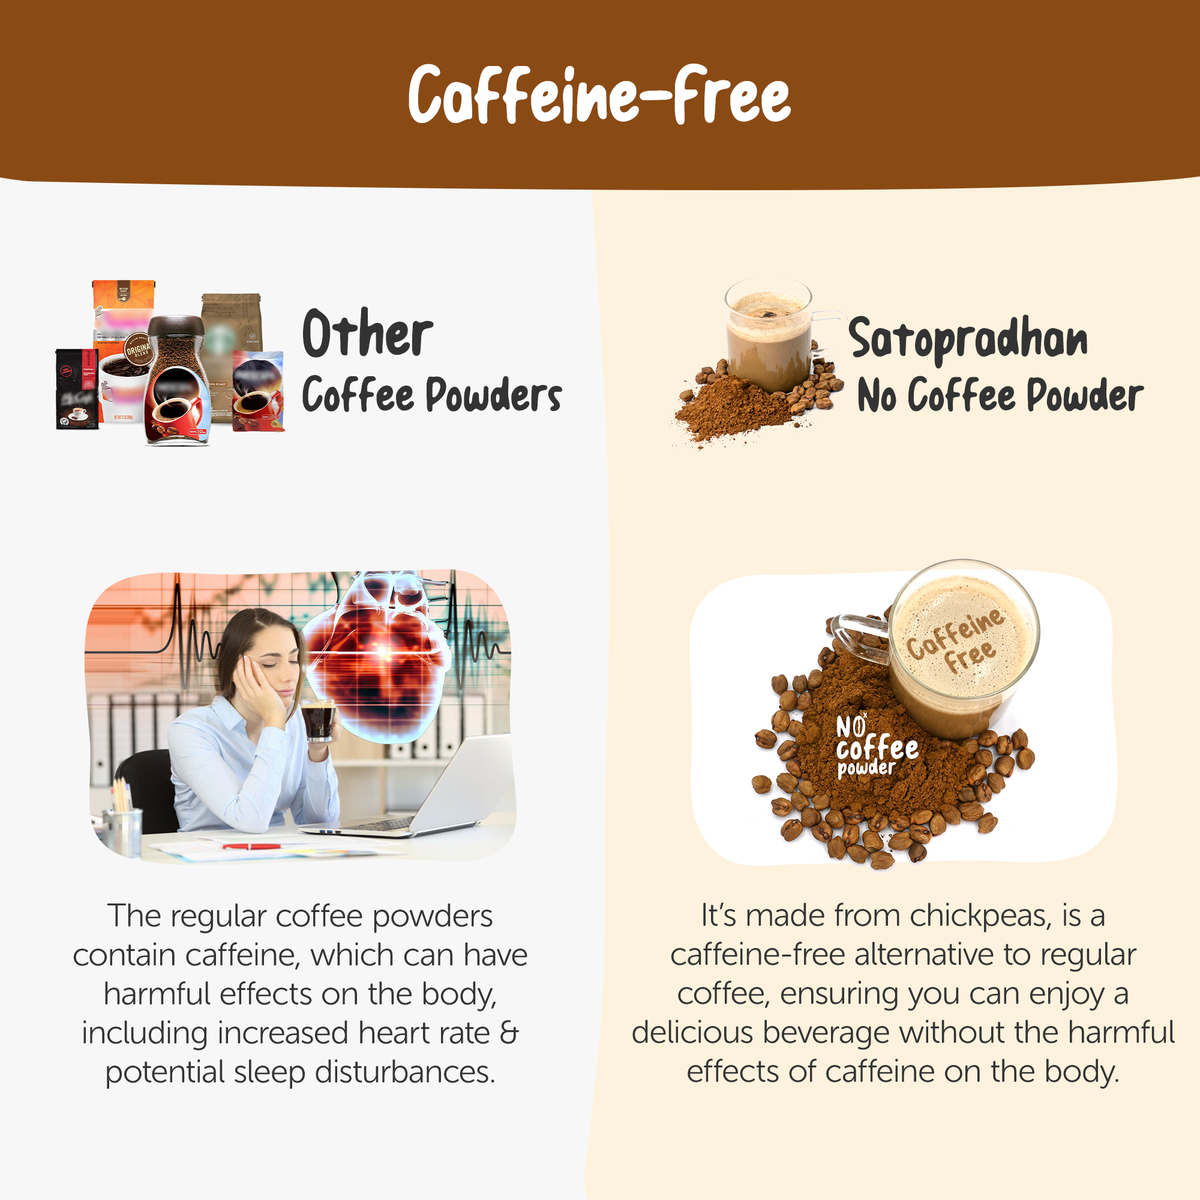 satopradhan no coffee powder is caffeine free  whereas regular coffee powder contains caffeine